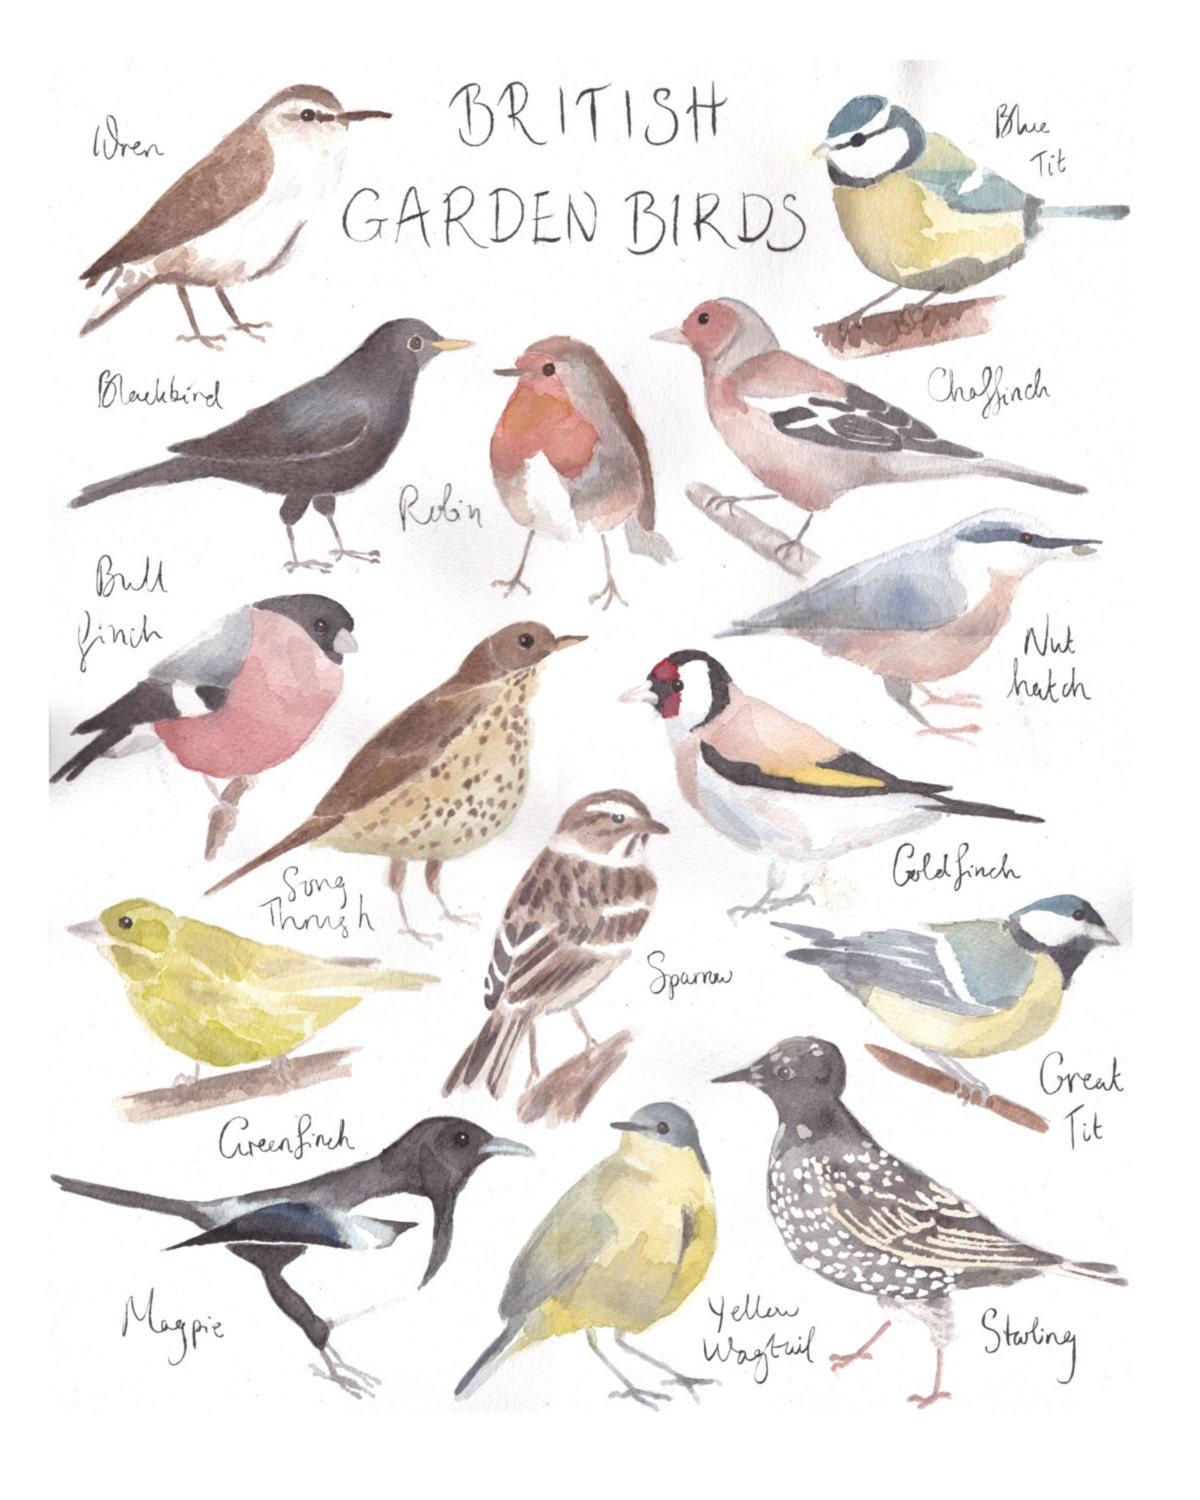 British Garden Birds Watercolor Painting Illustration Print 8